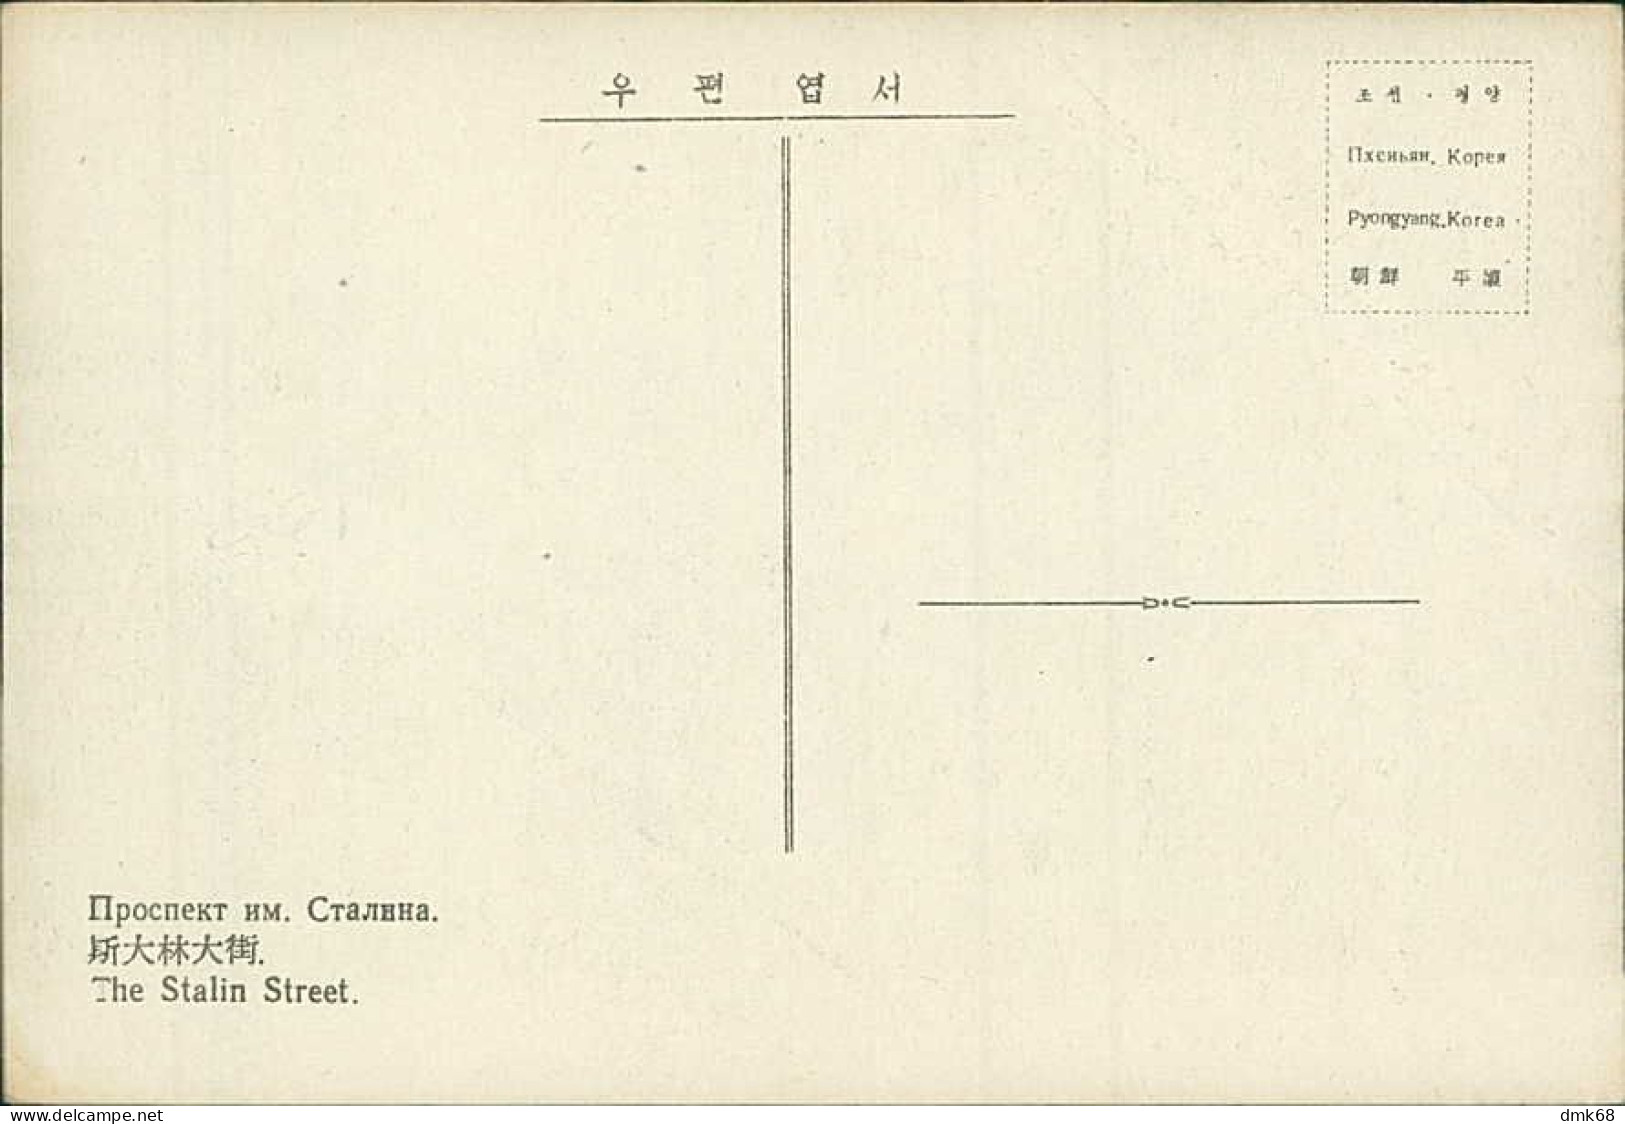 NORTH KOREA - PYONGYANG - THE STALIN STREET - 1960s (18369) - Korea (Noord)